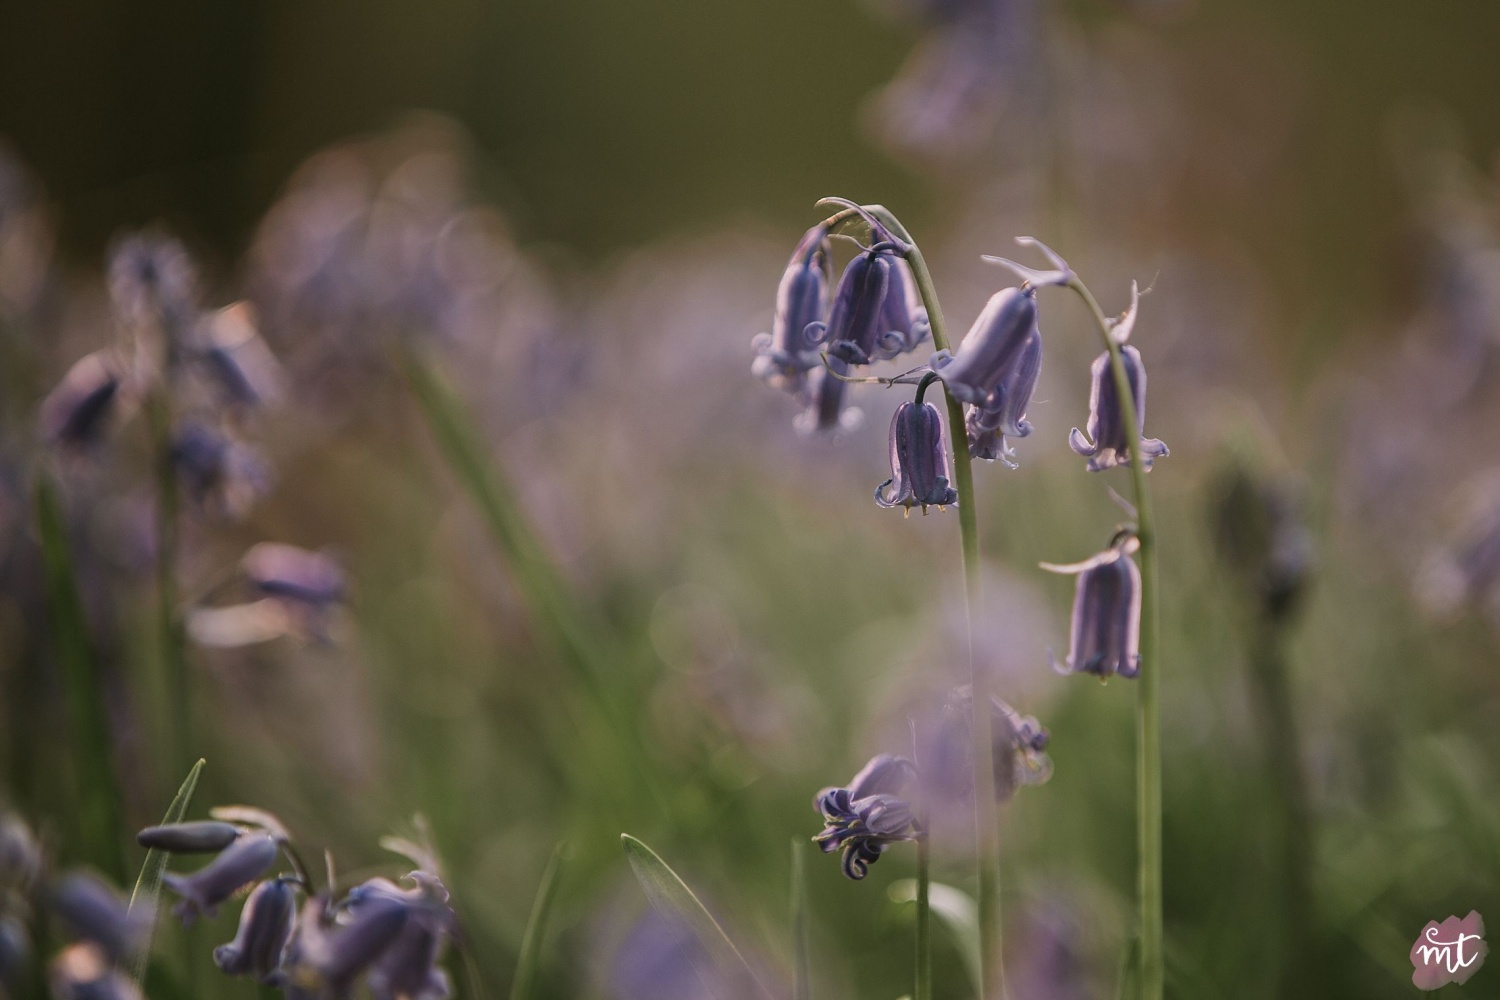 Seasons, Spring, Natural Light, UK Photographer, Real Life, Mother Nature